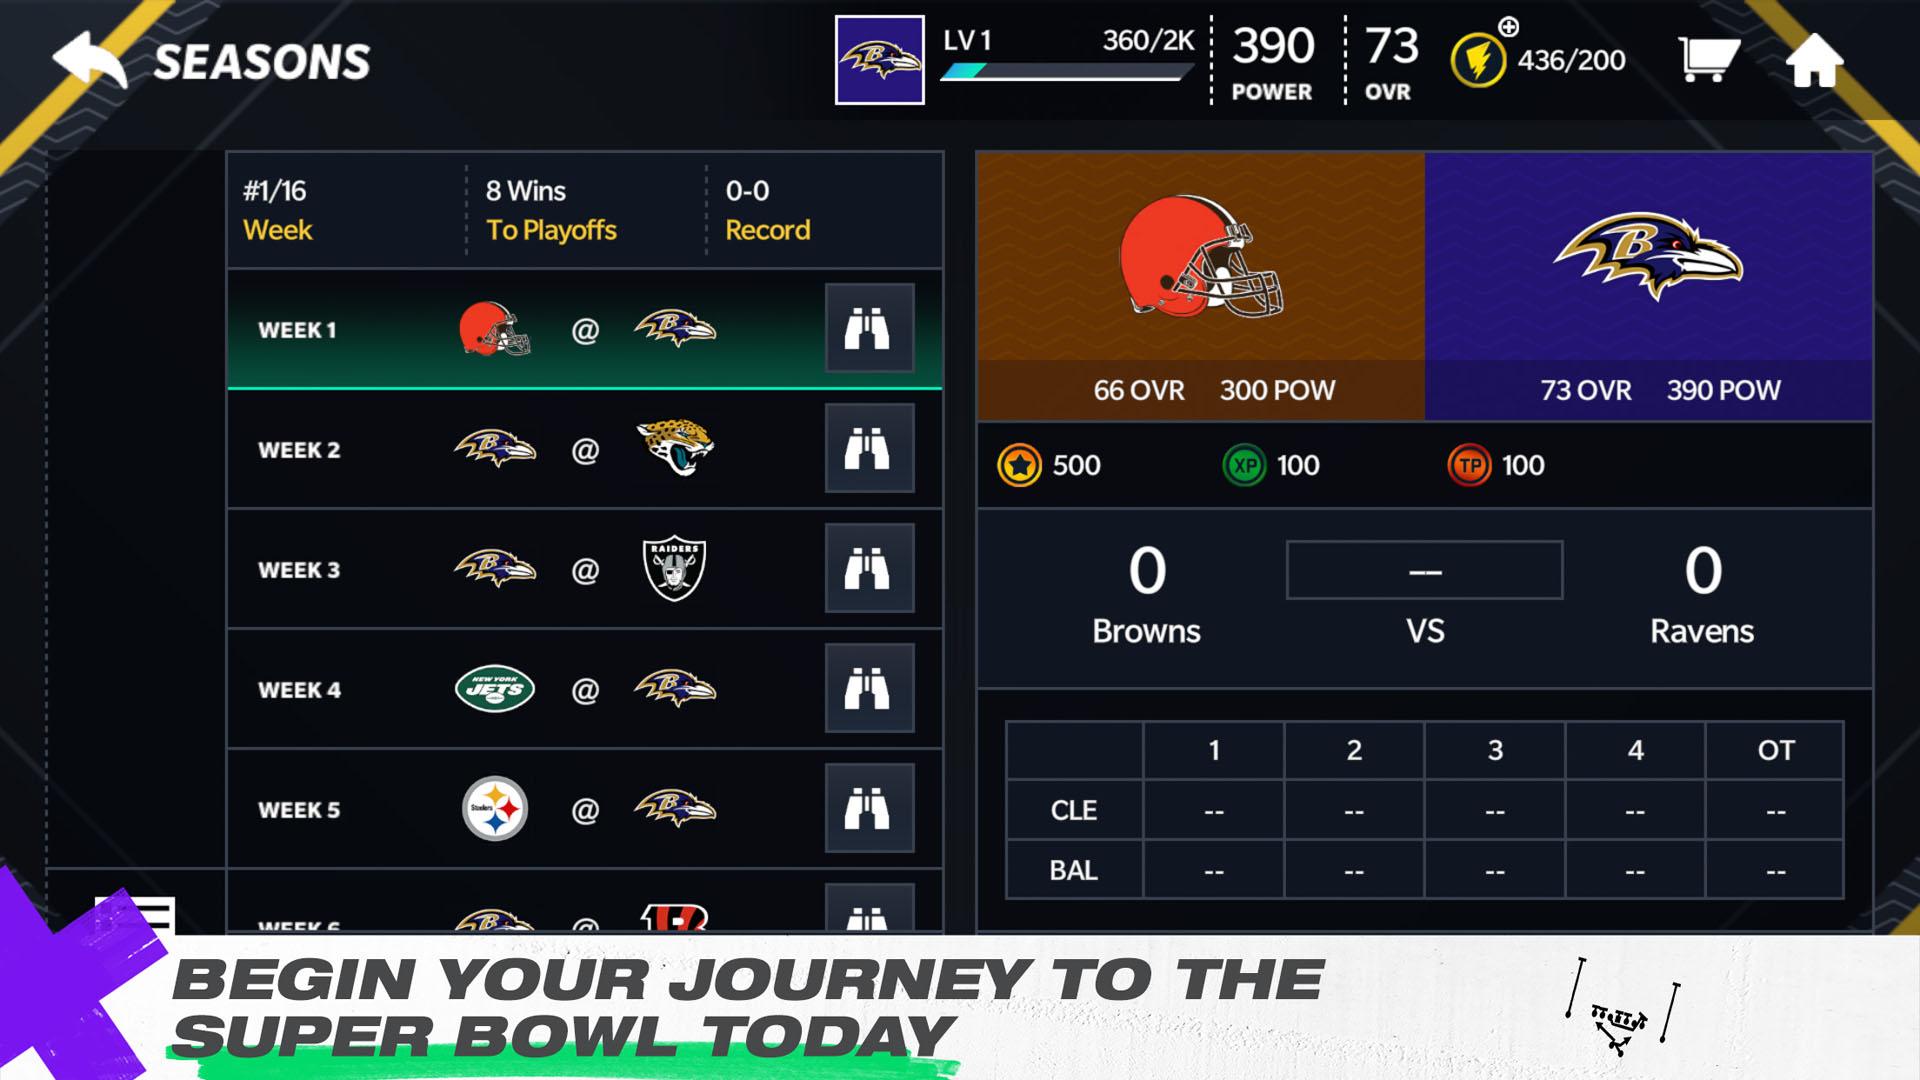 Madden NFL 21 Mobile Football screenshot 1